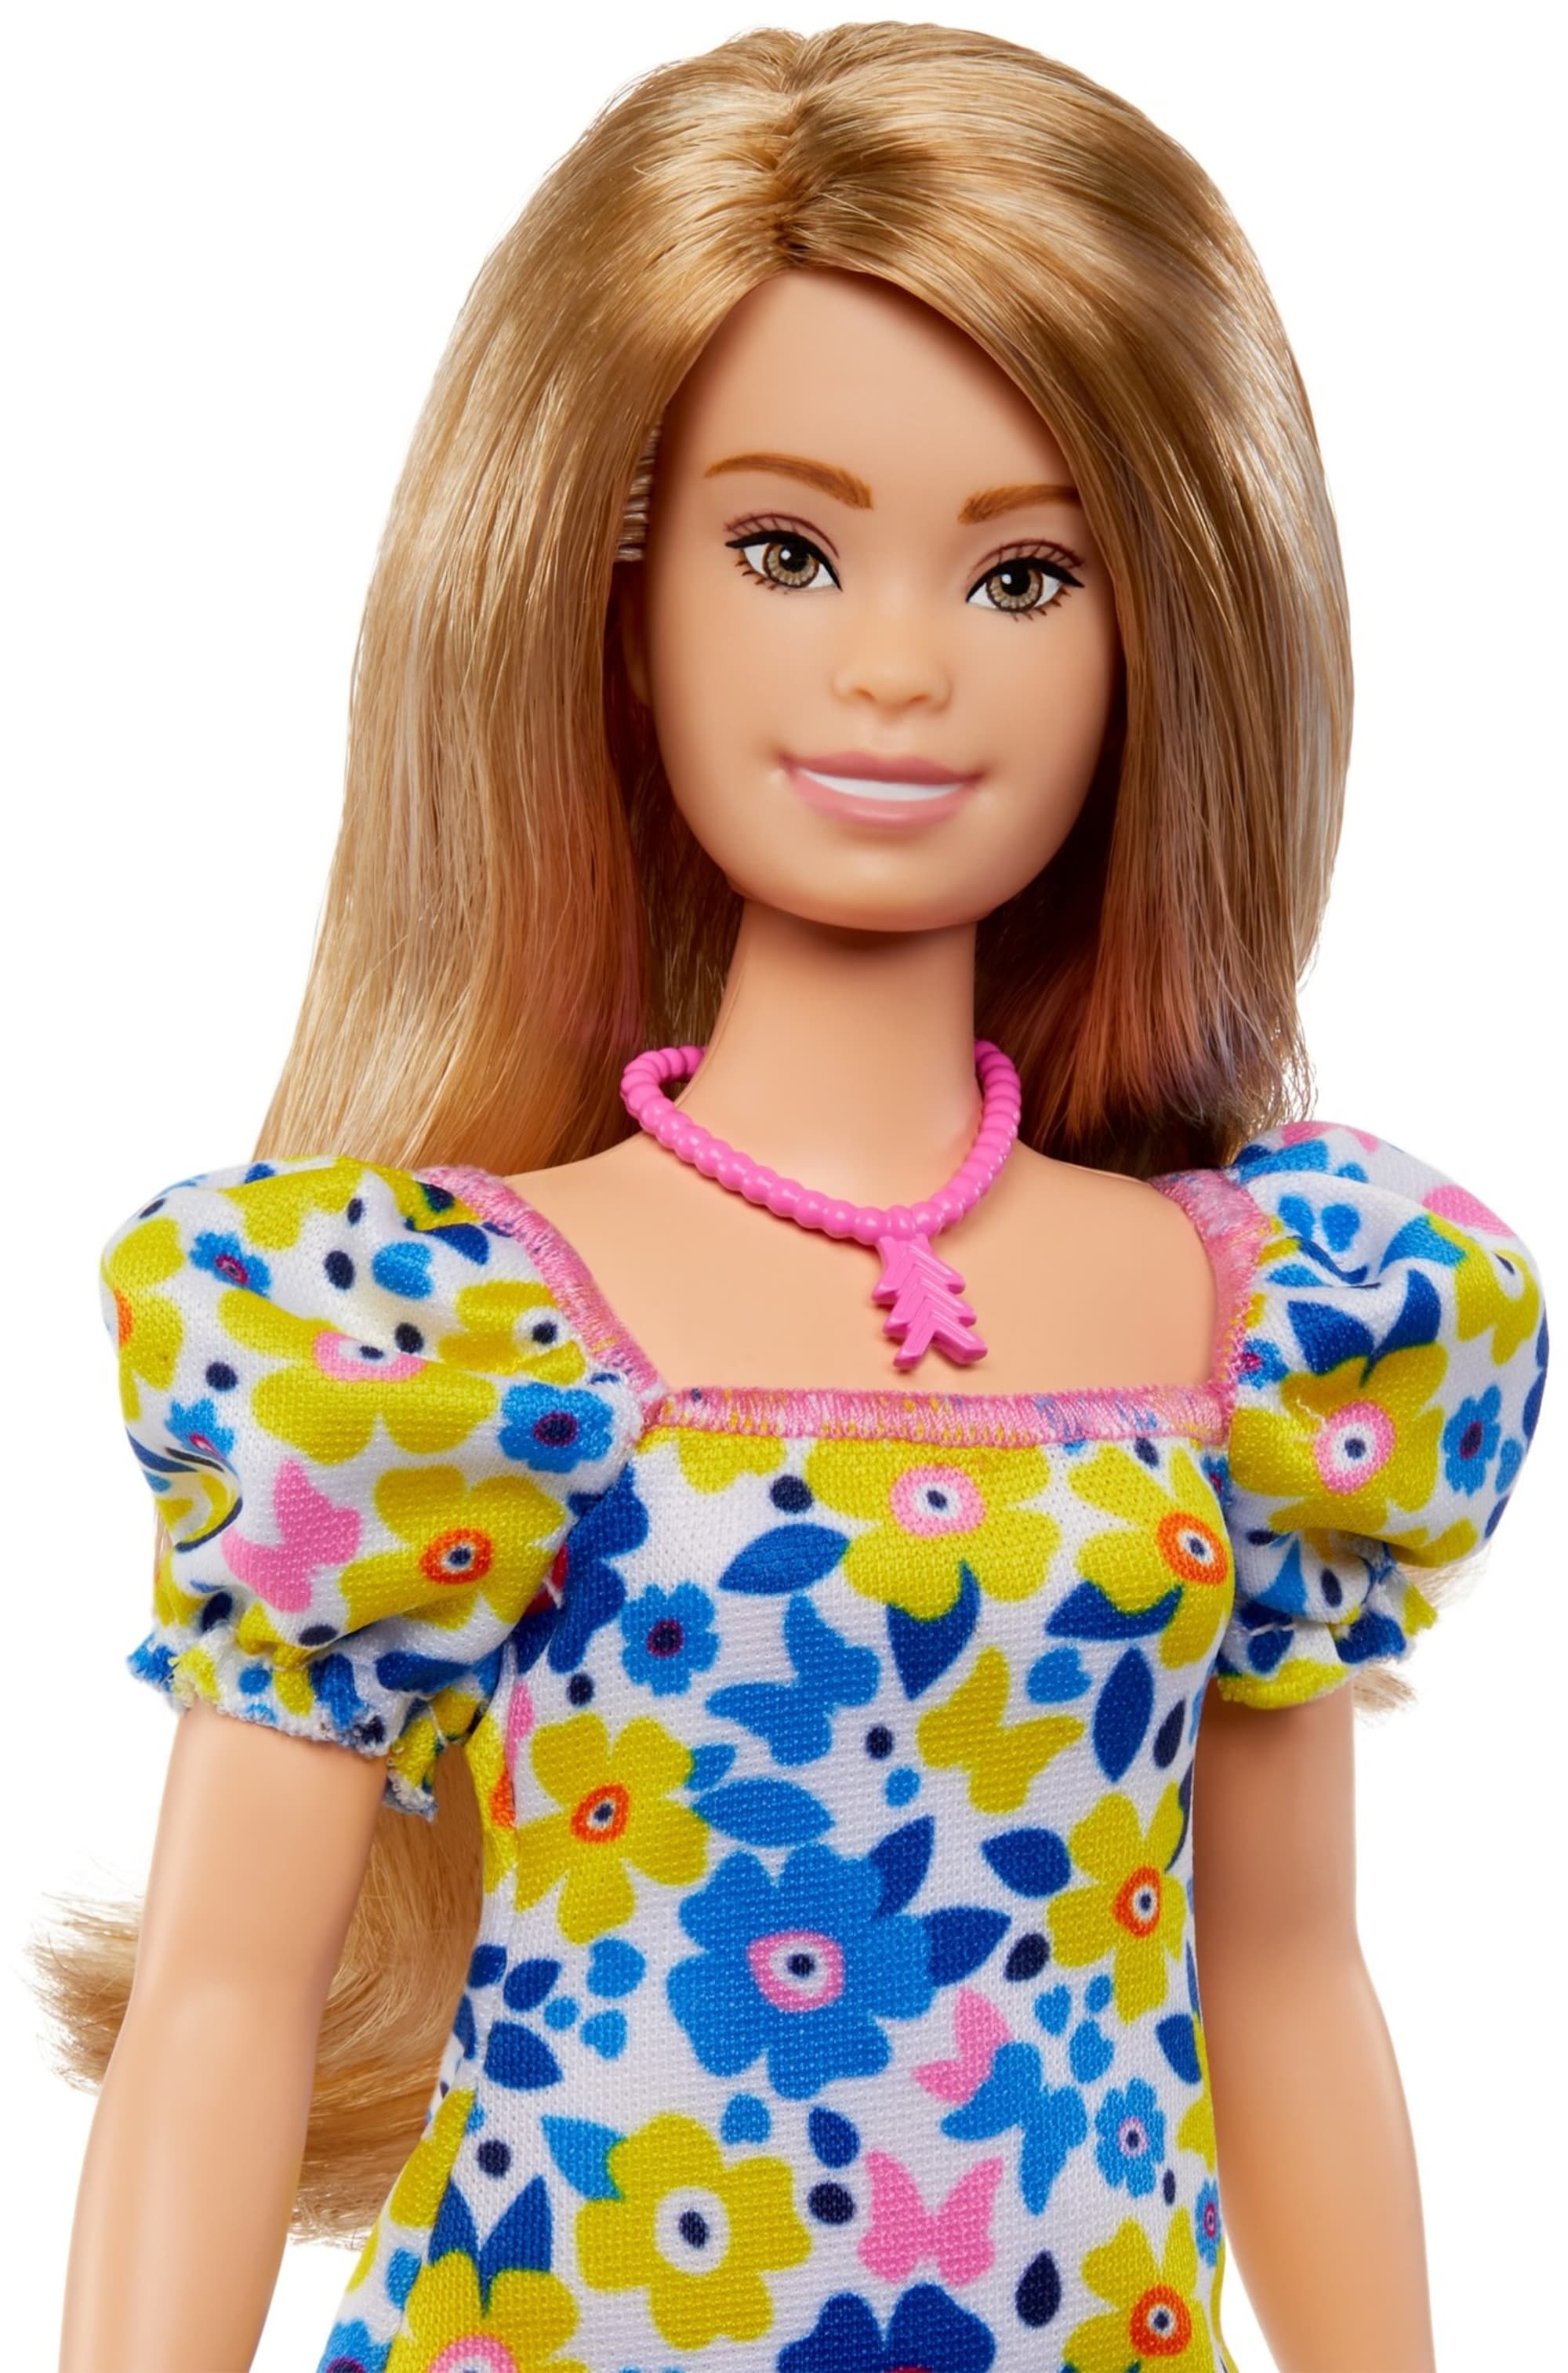 Buy wholesale Barbie – Accessory Barbie Fashionistas Barbie's